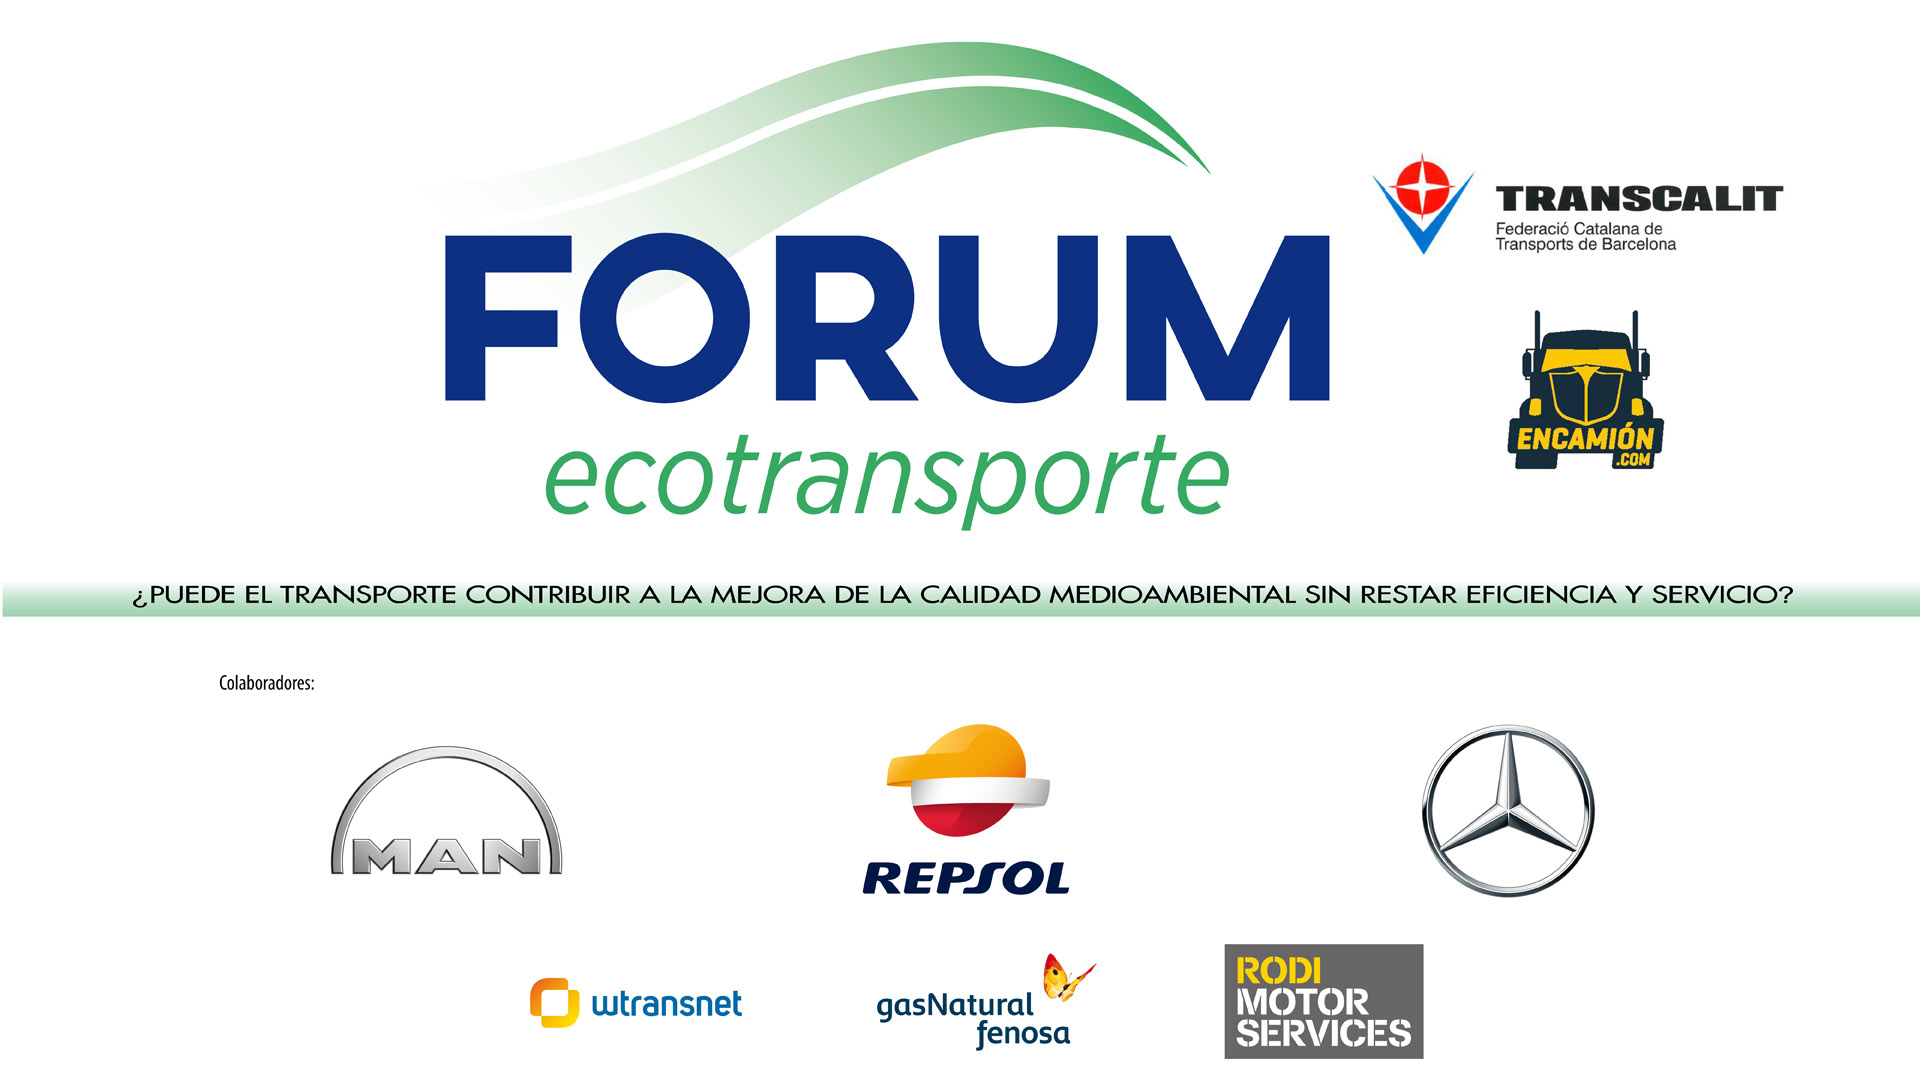 El Fórum Ecotransporte Transcalit-www.encamion.com se celebra el próximo 5 de mayo.